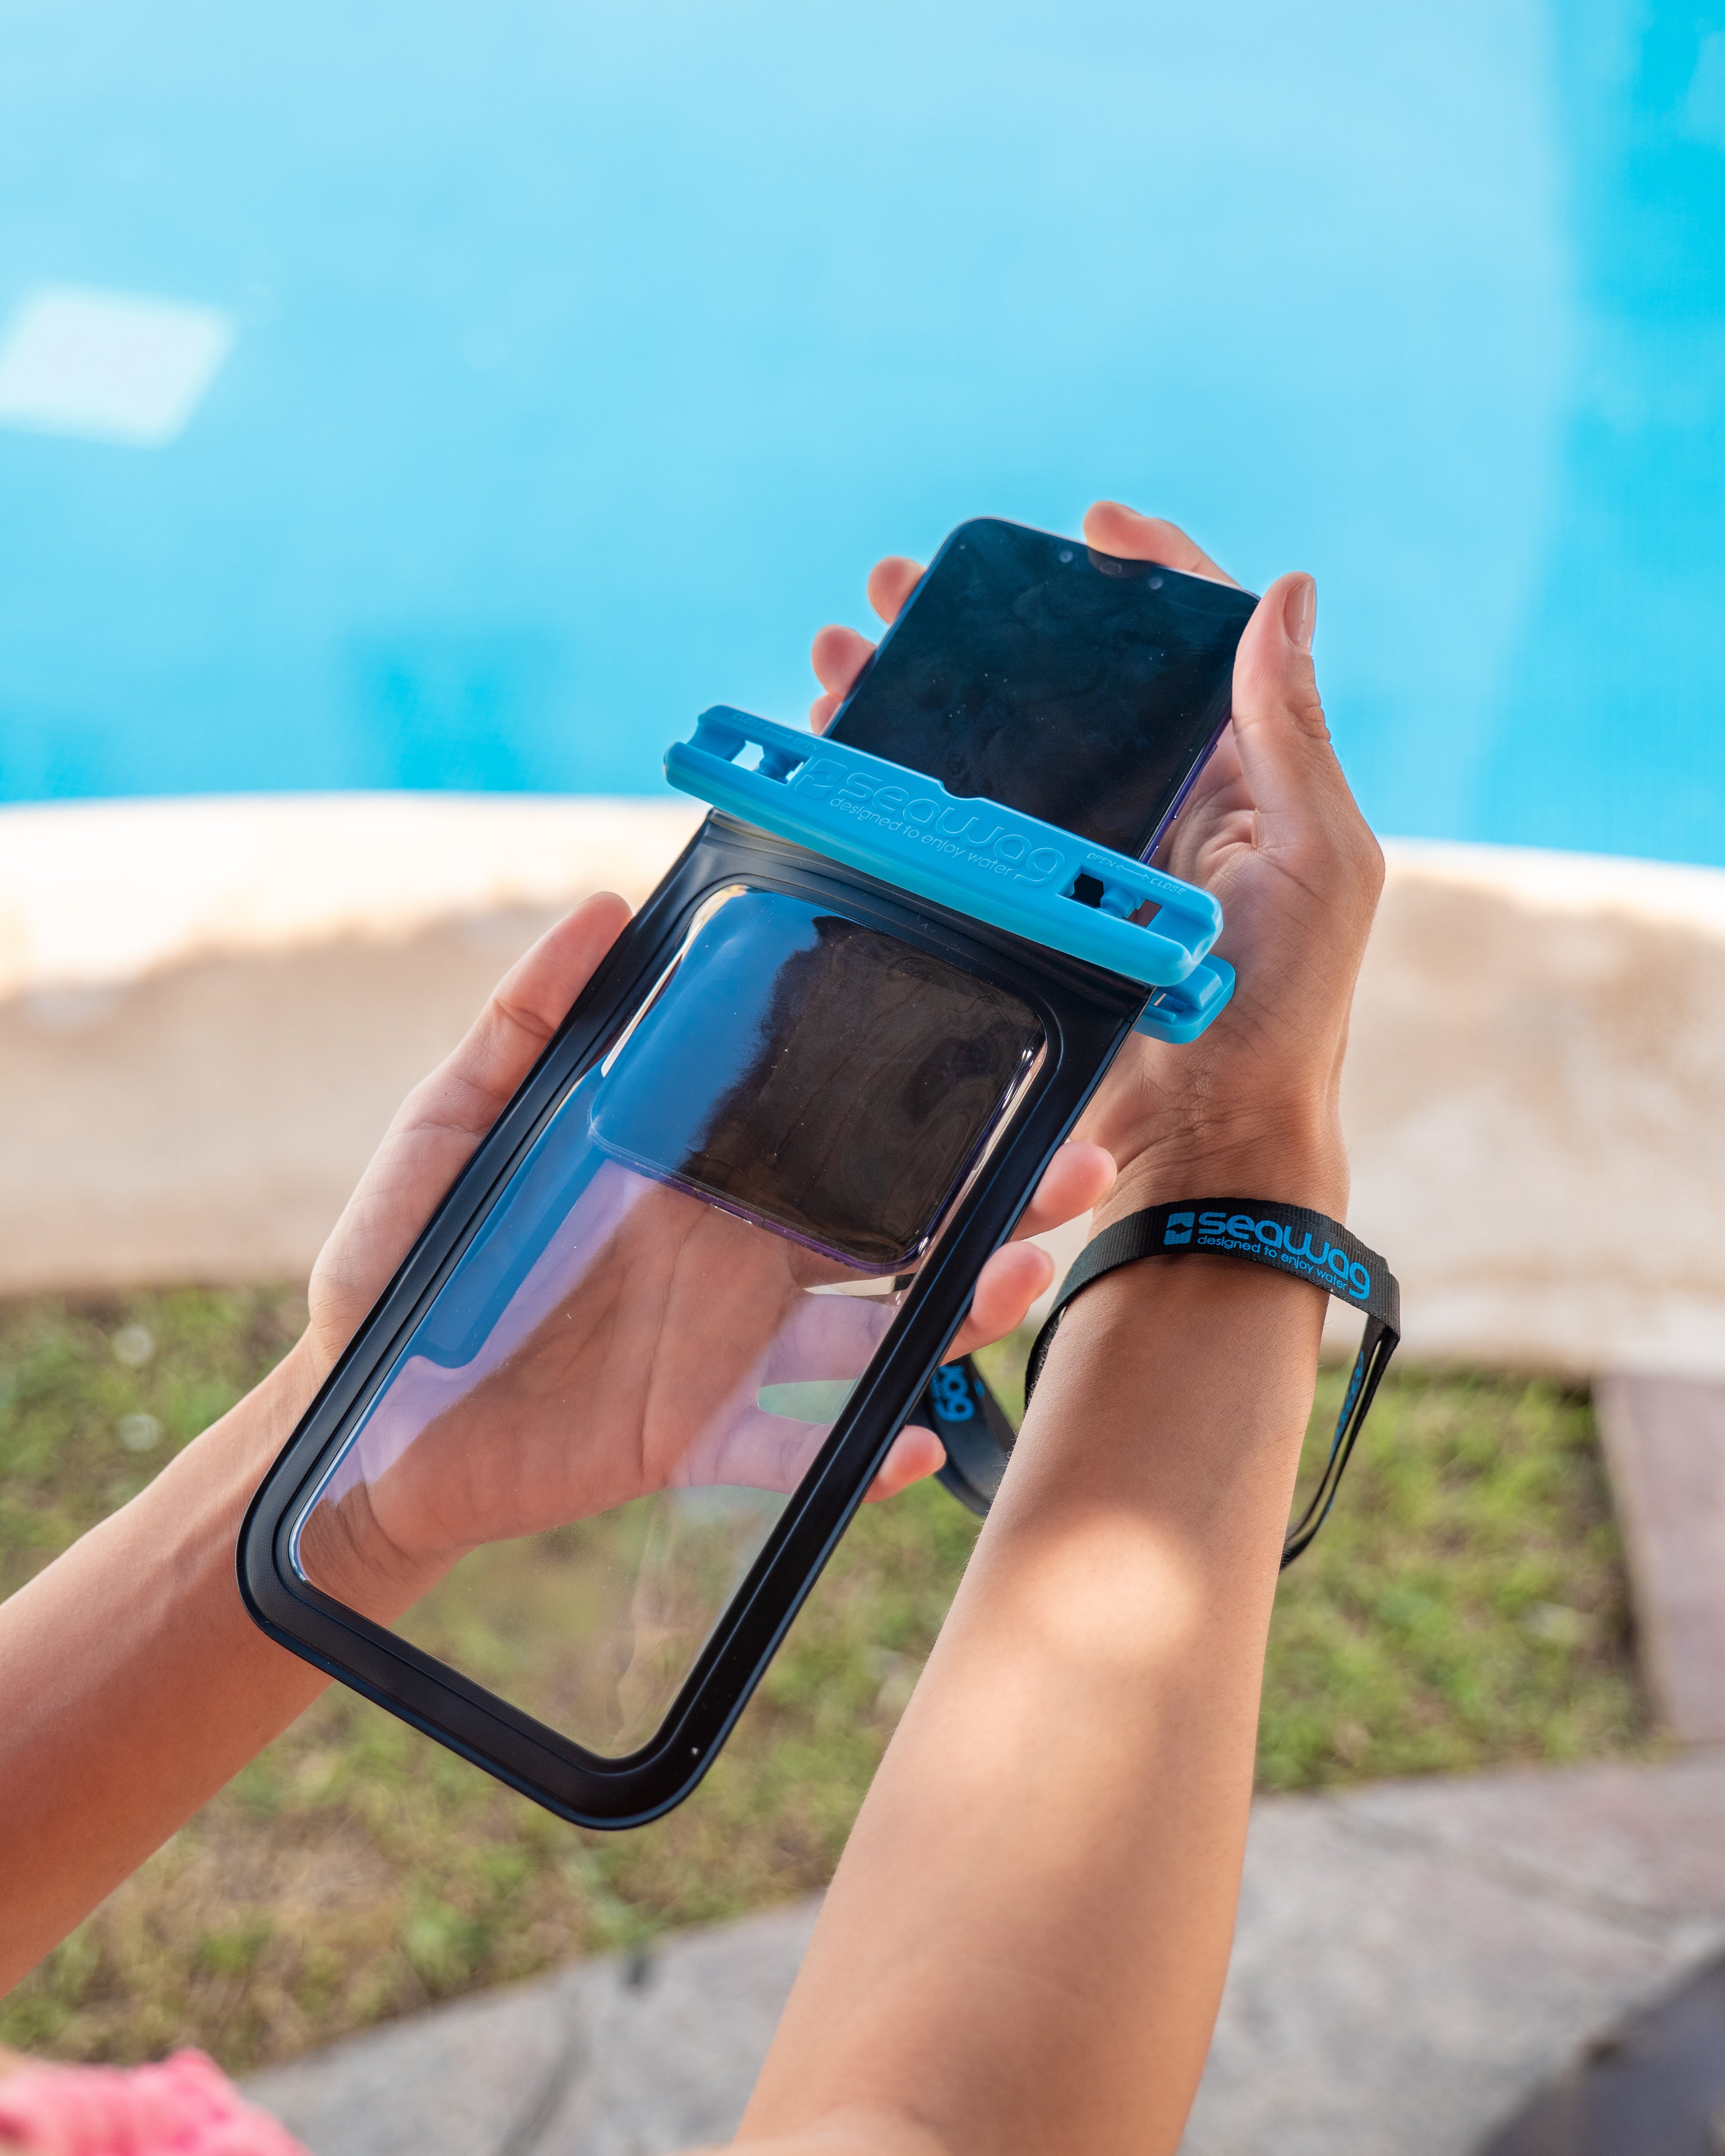 Universal Waterproof Case For Smartphone - White/Orange